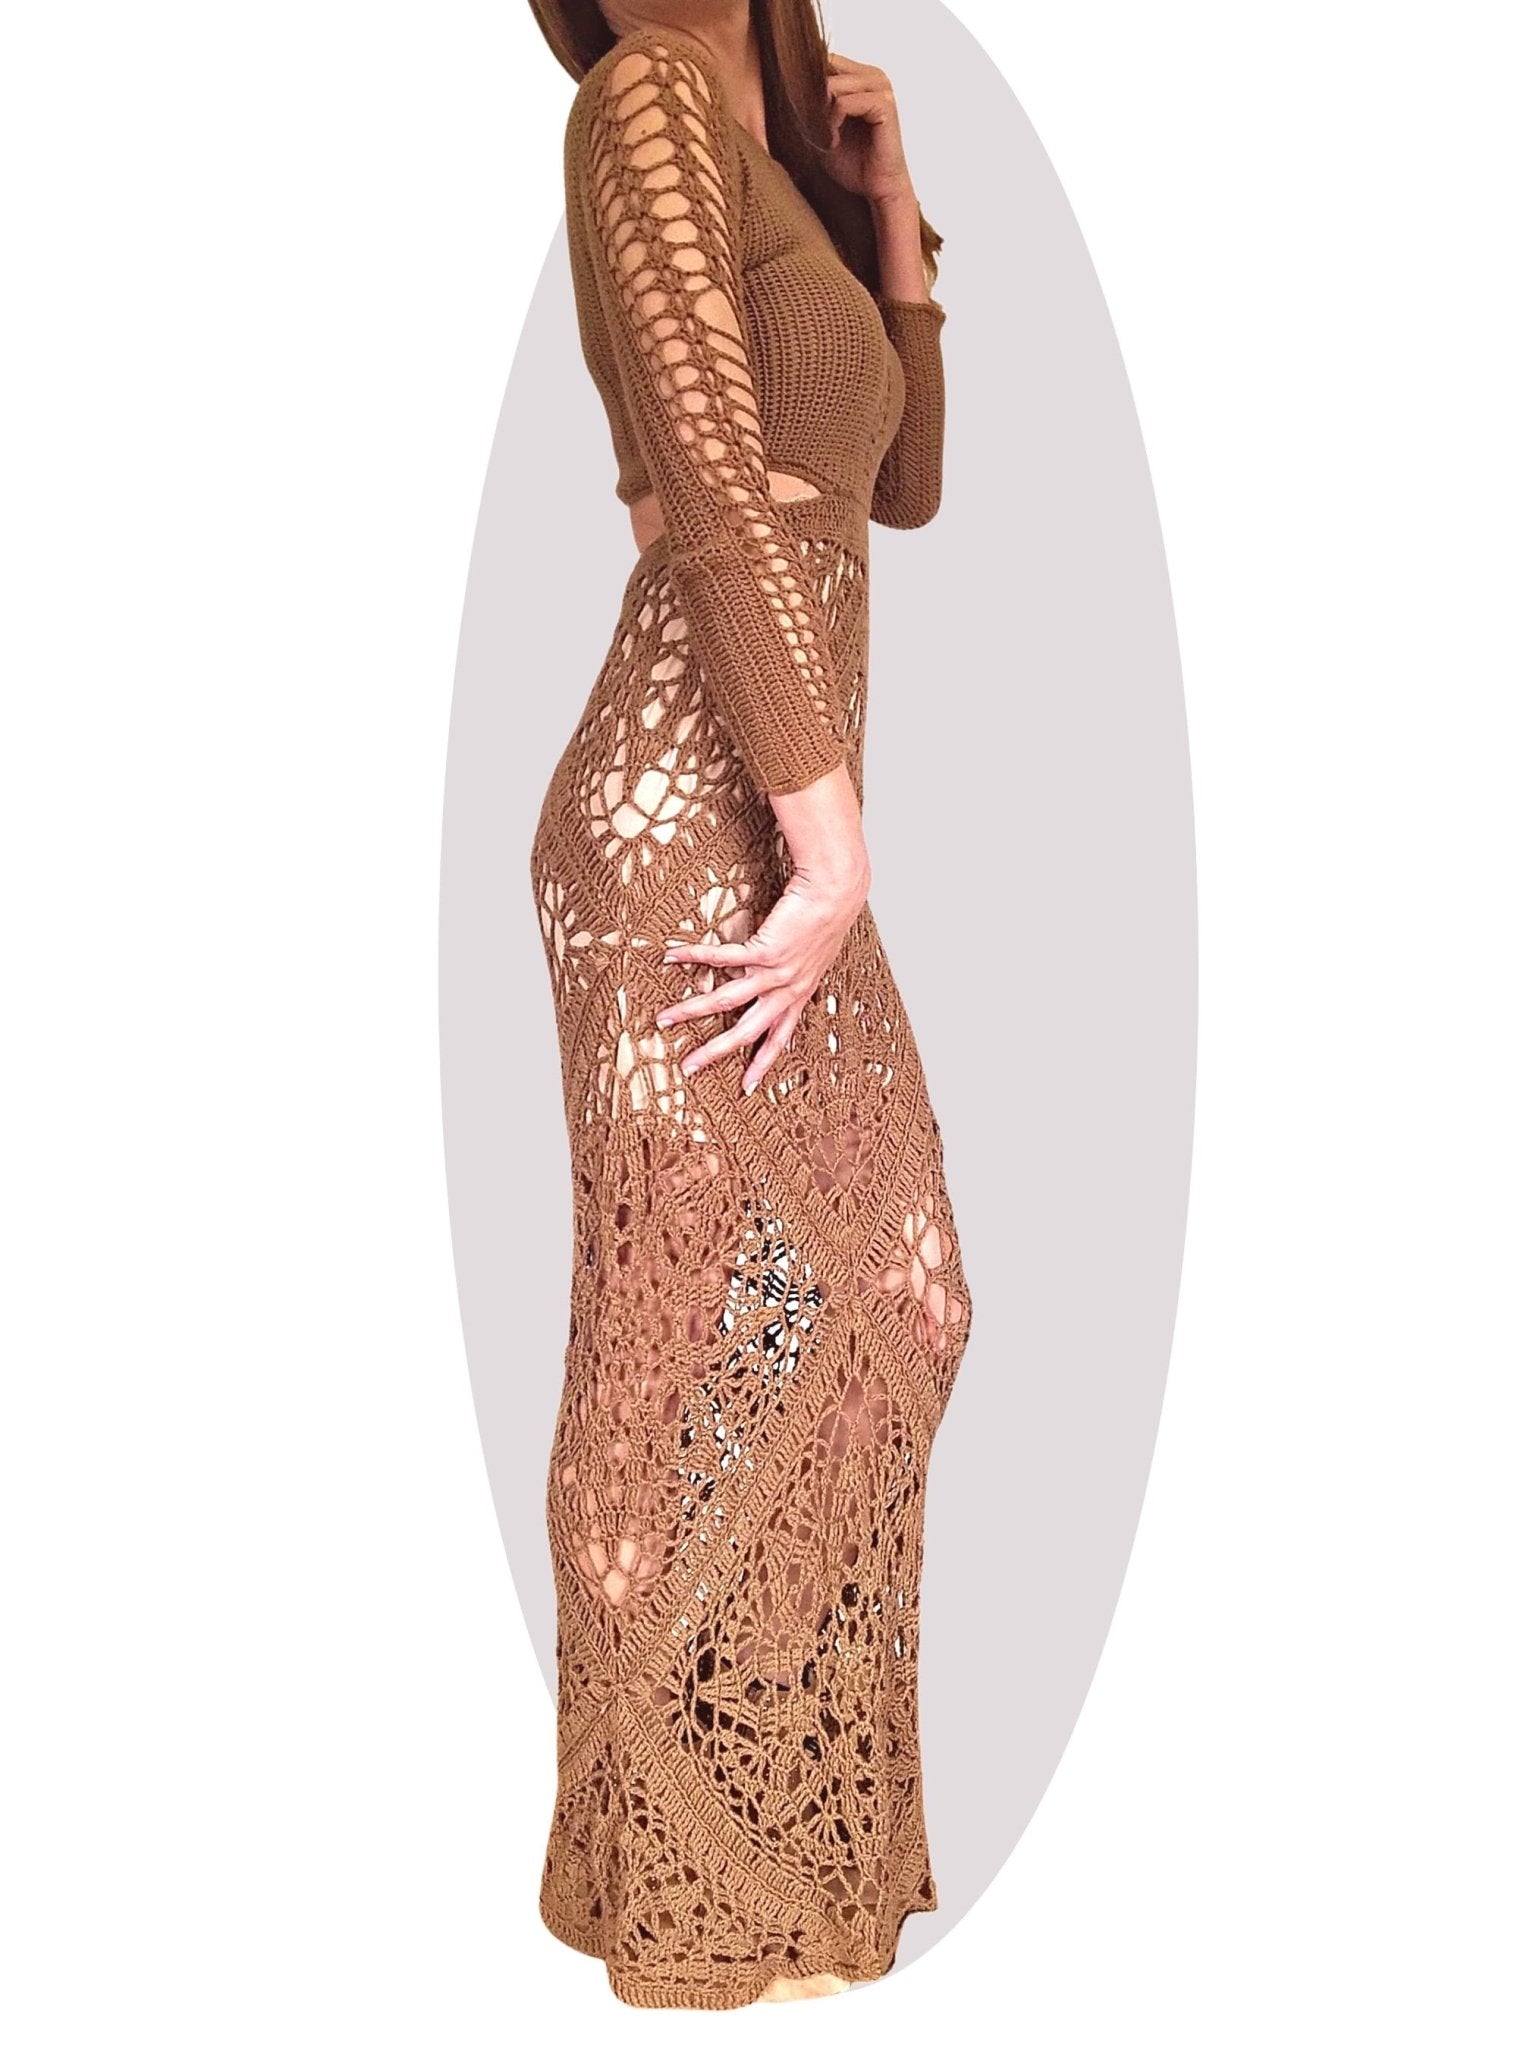 Crochet Dress Pattern - Motion - Mermaidcat Designs